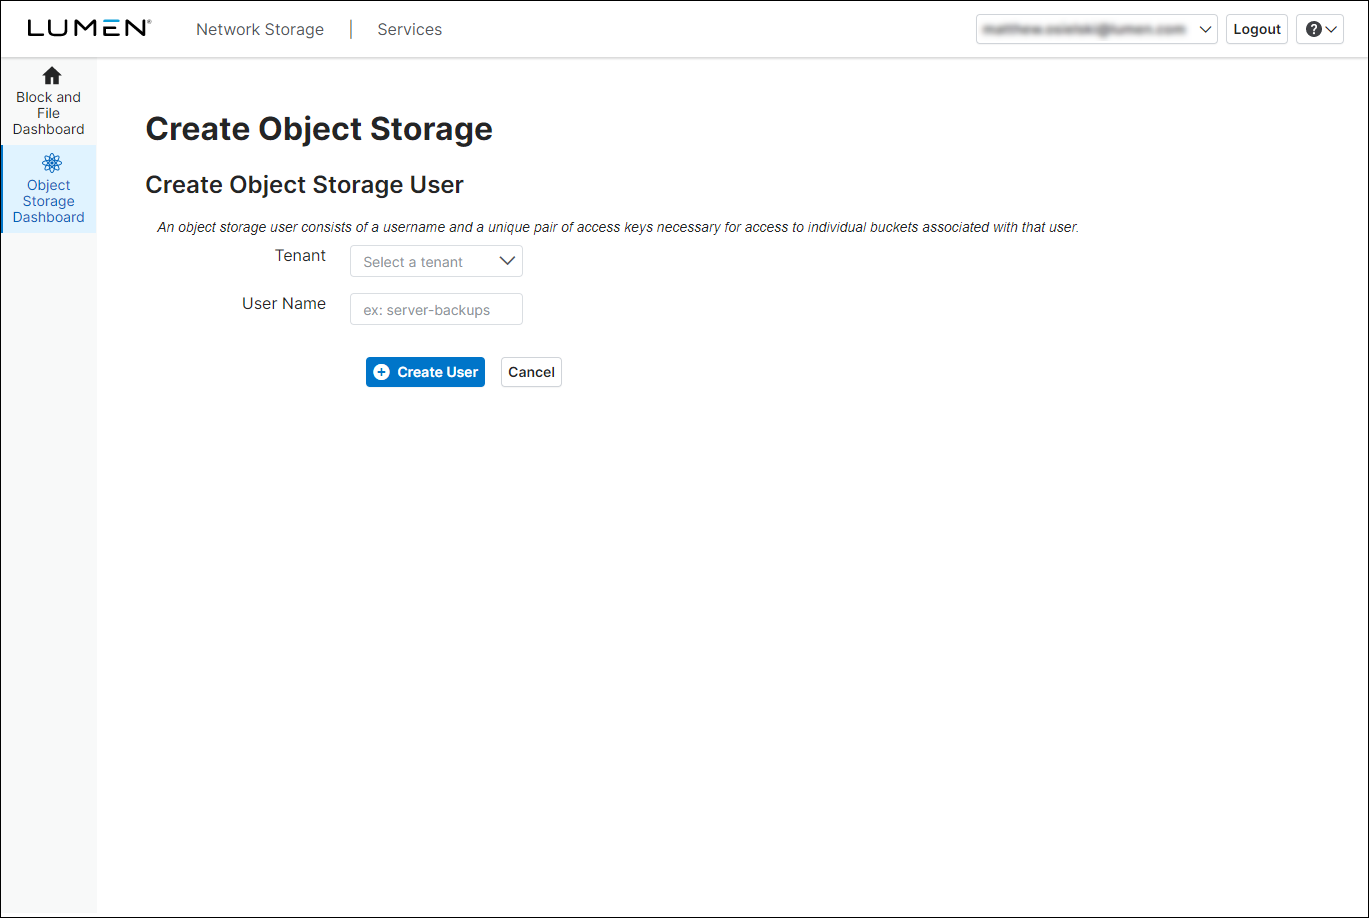 Create Object Storage User